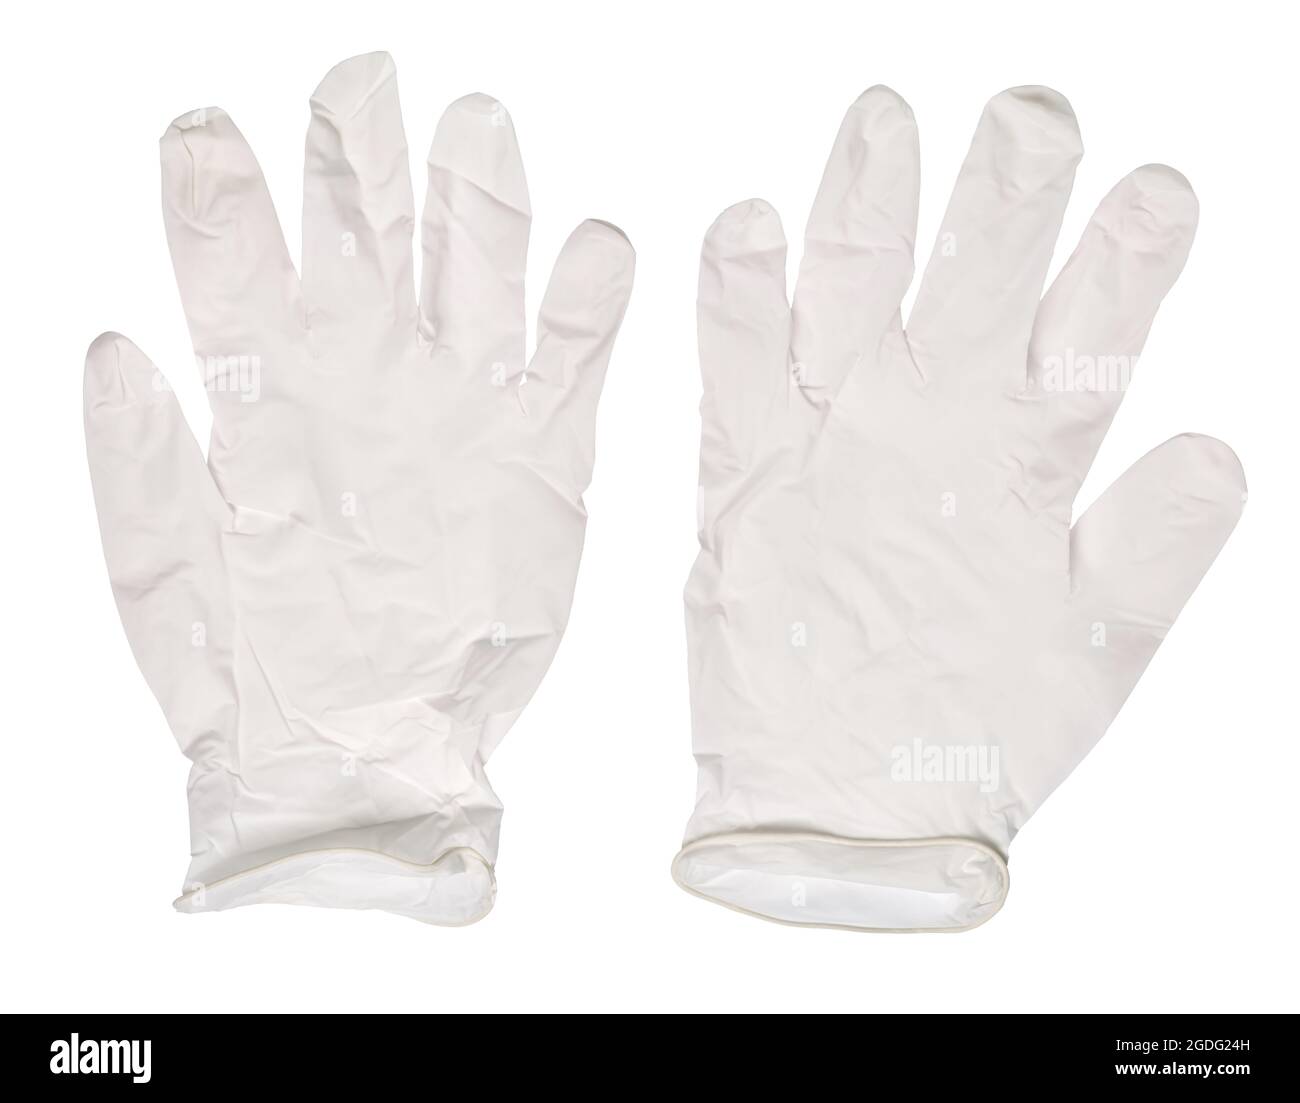 Latex Handschuh Schutz Virus Corona Coronavirus Krankheit Epidemie medizinische Gesundheit Hygiene Stockfoto